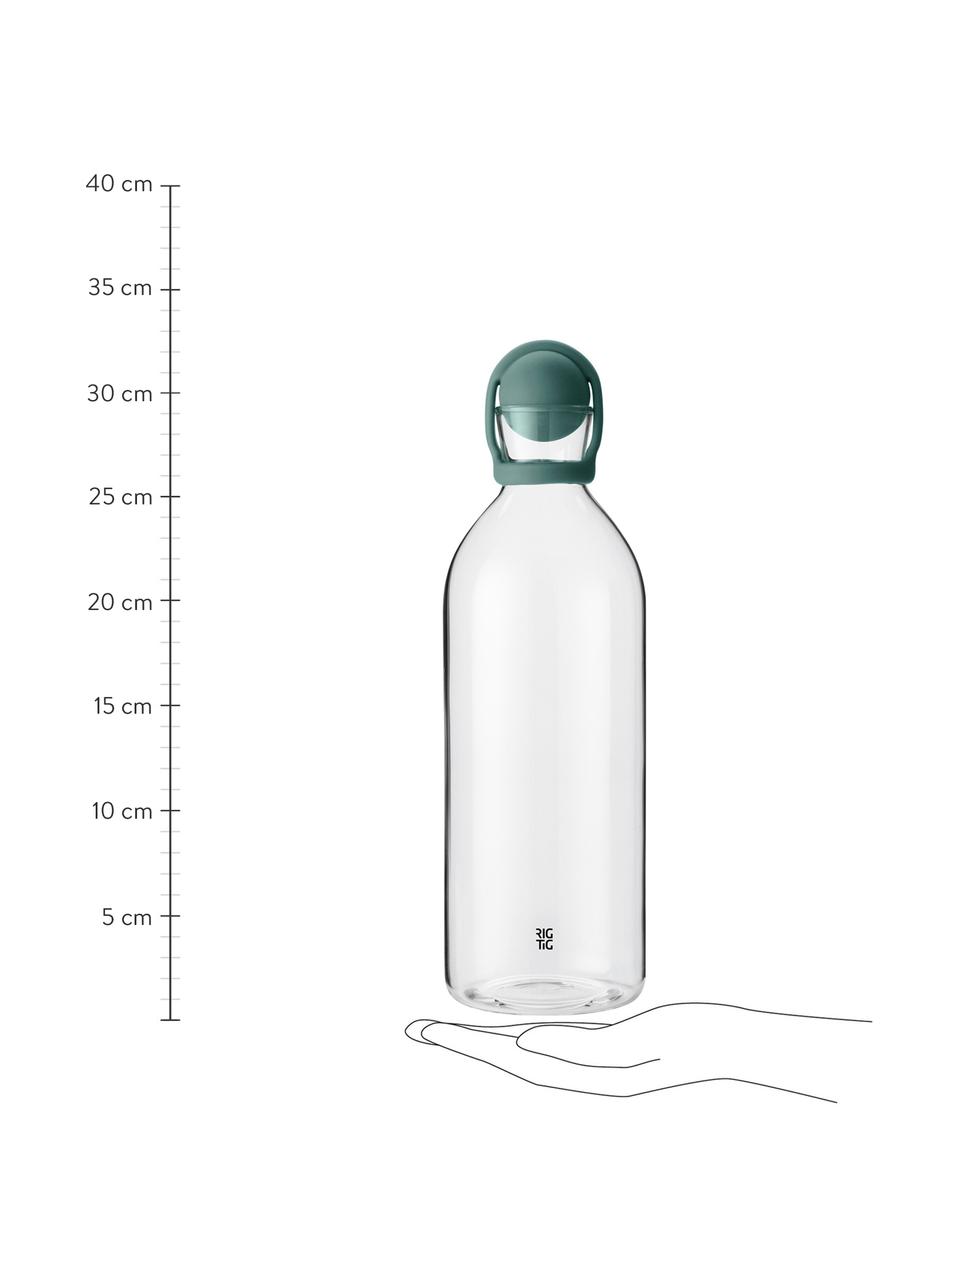 Wasserkaraffe Cool-It mit Verschluss, 1.5 L, Verschluss: Gummi, Türkis, Transparent, H 31 cm, 1.5 L